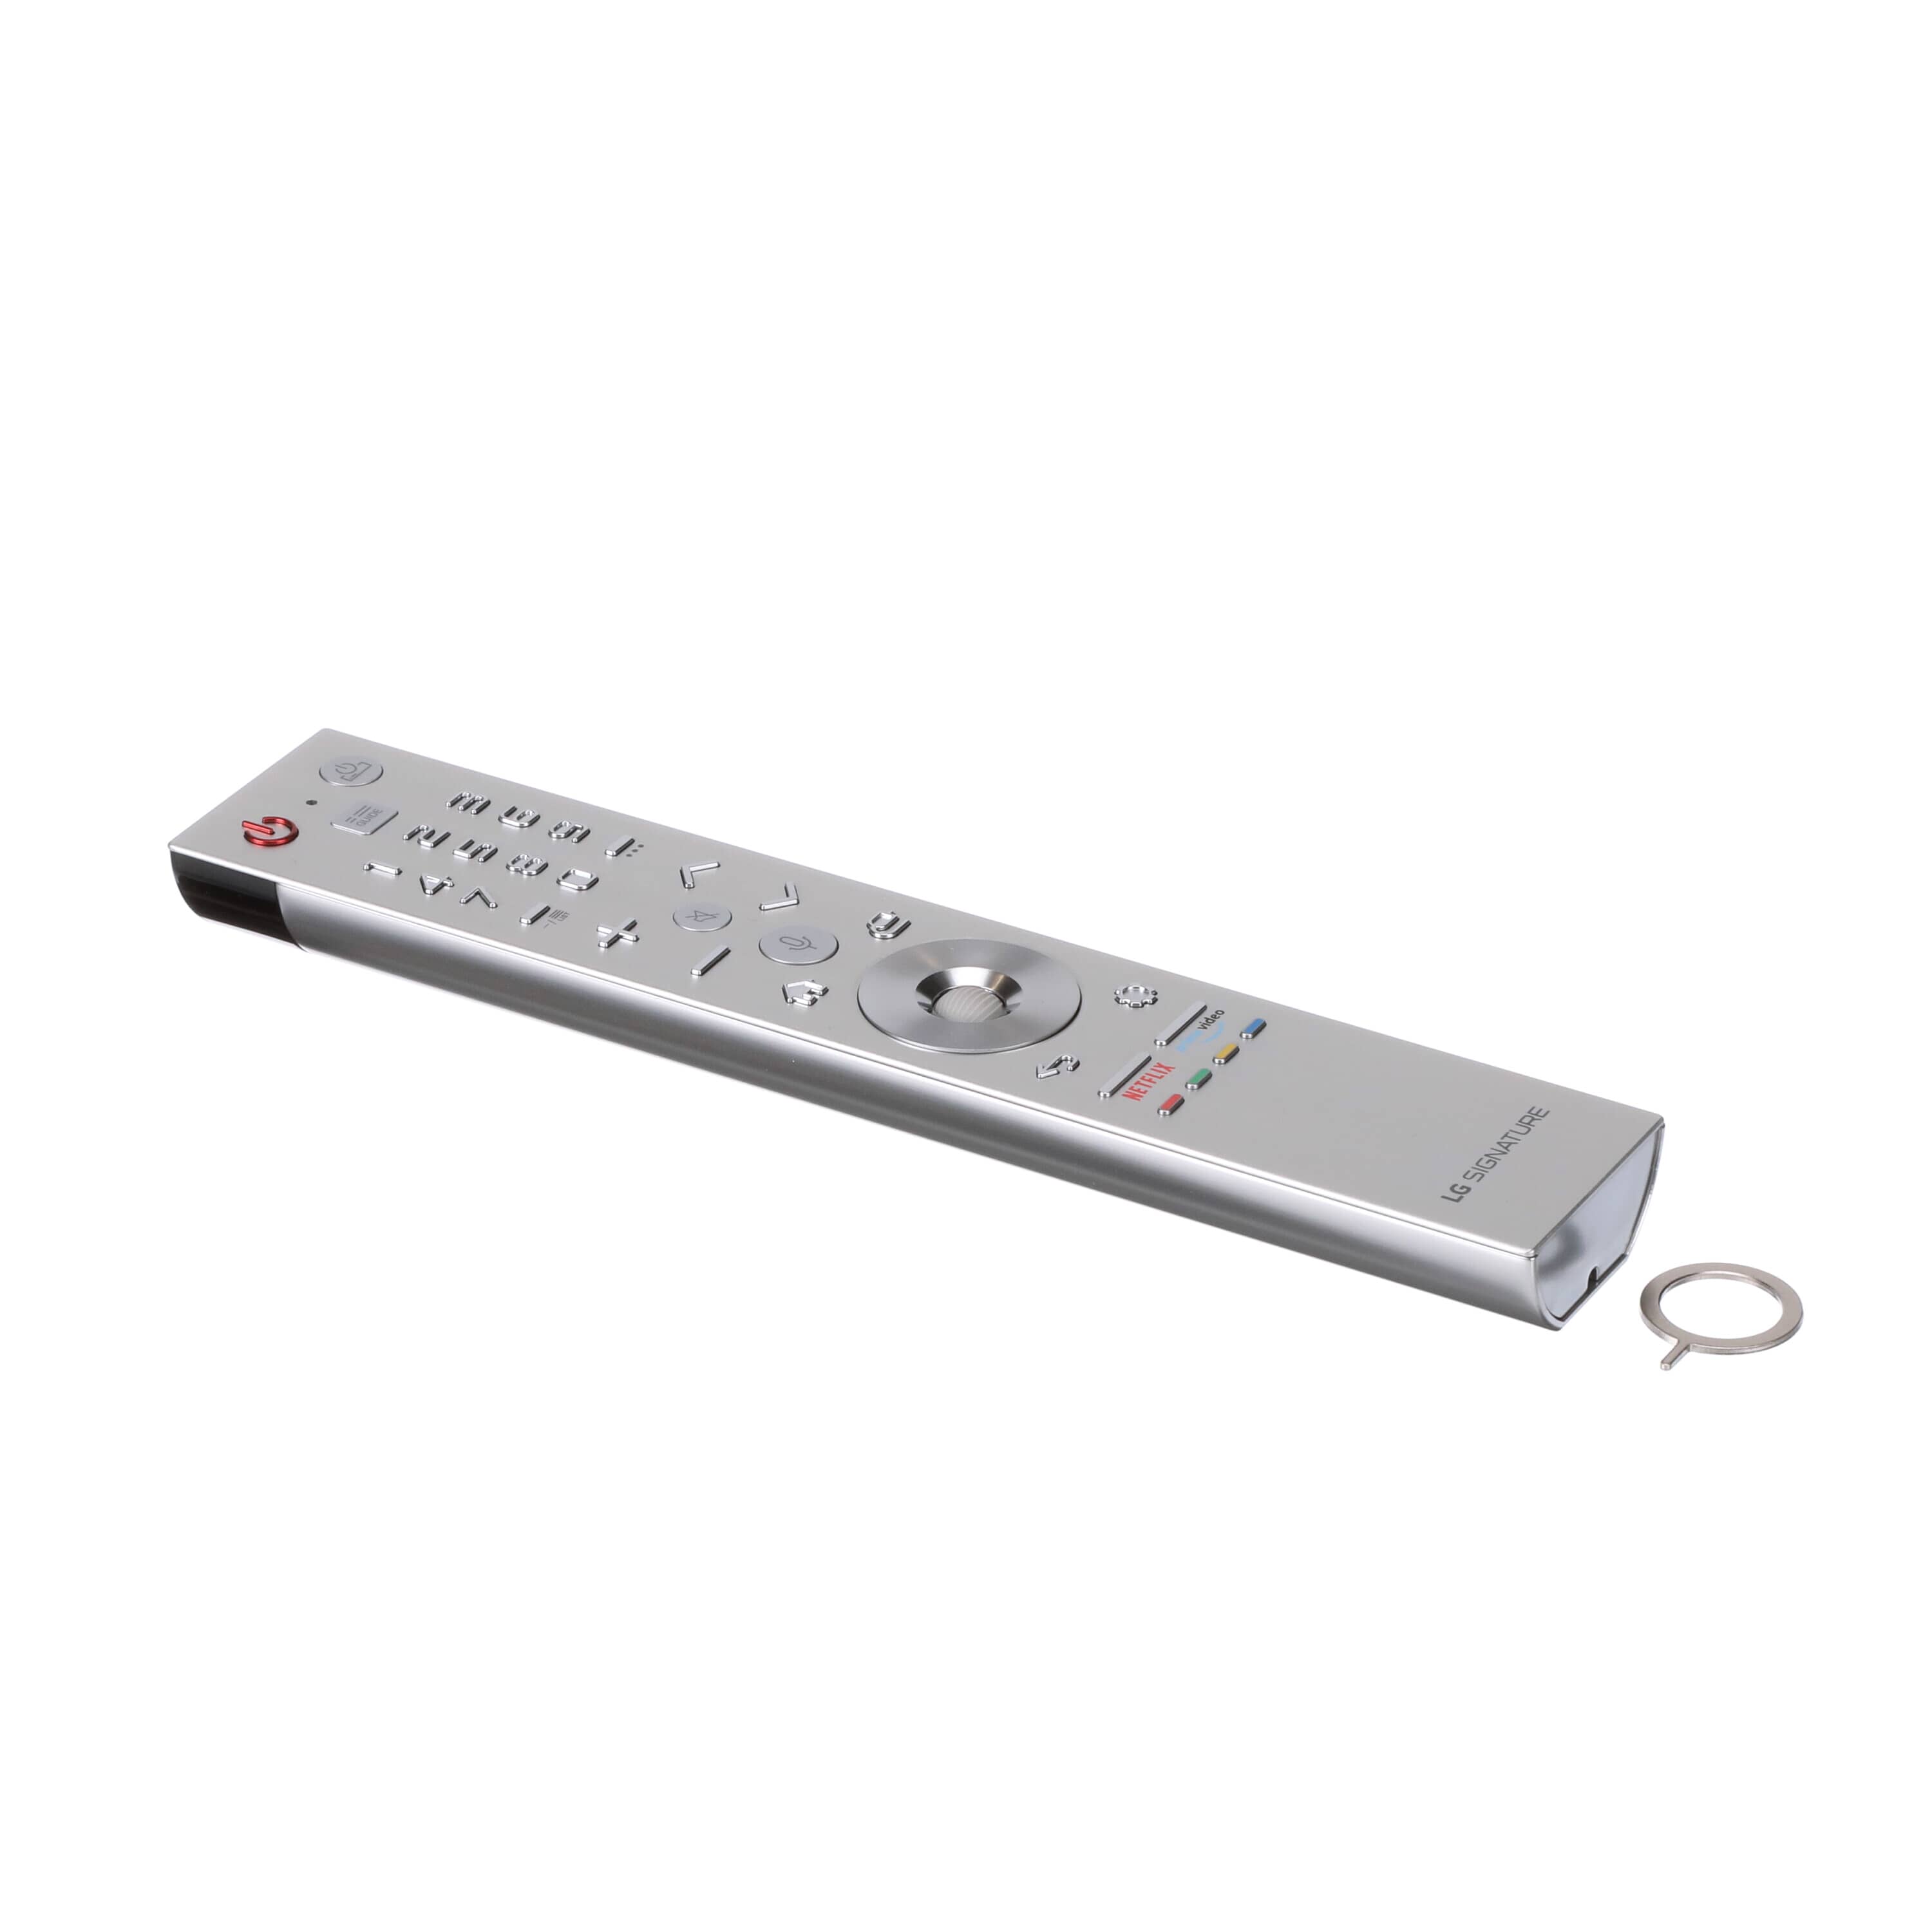 LG AKB75755301 TV Remote Control